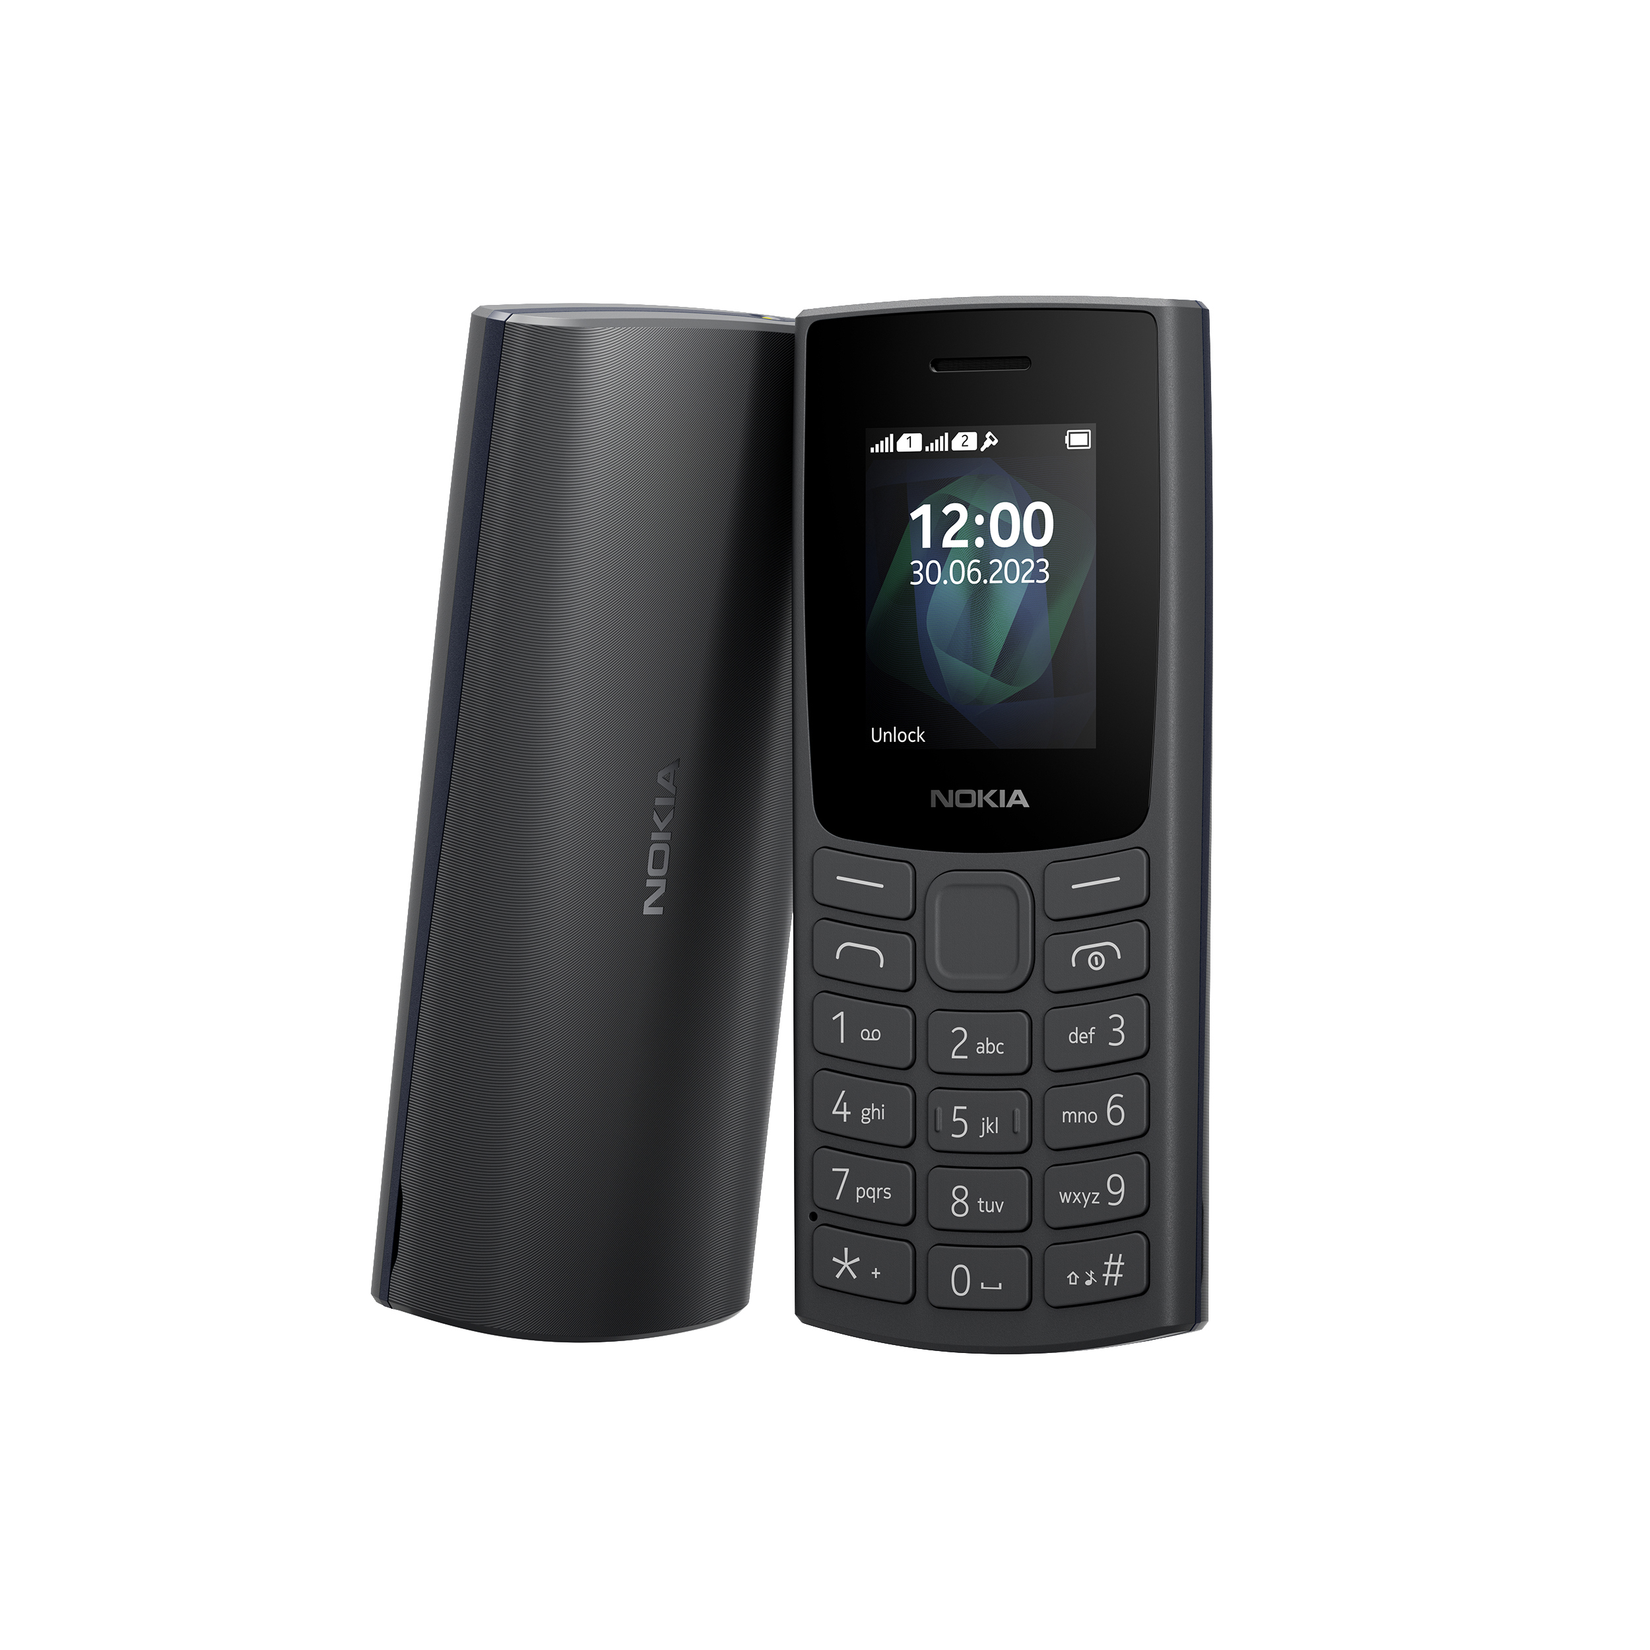 NOKIA 105 2023 Mobiltelefon, Charcoal für 22,99€ in Media Markt